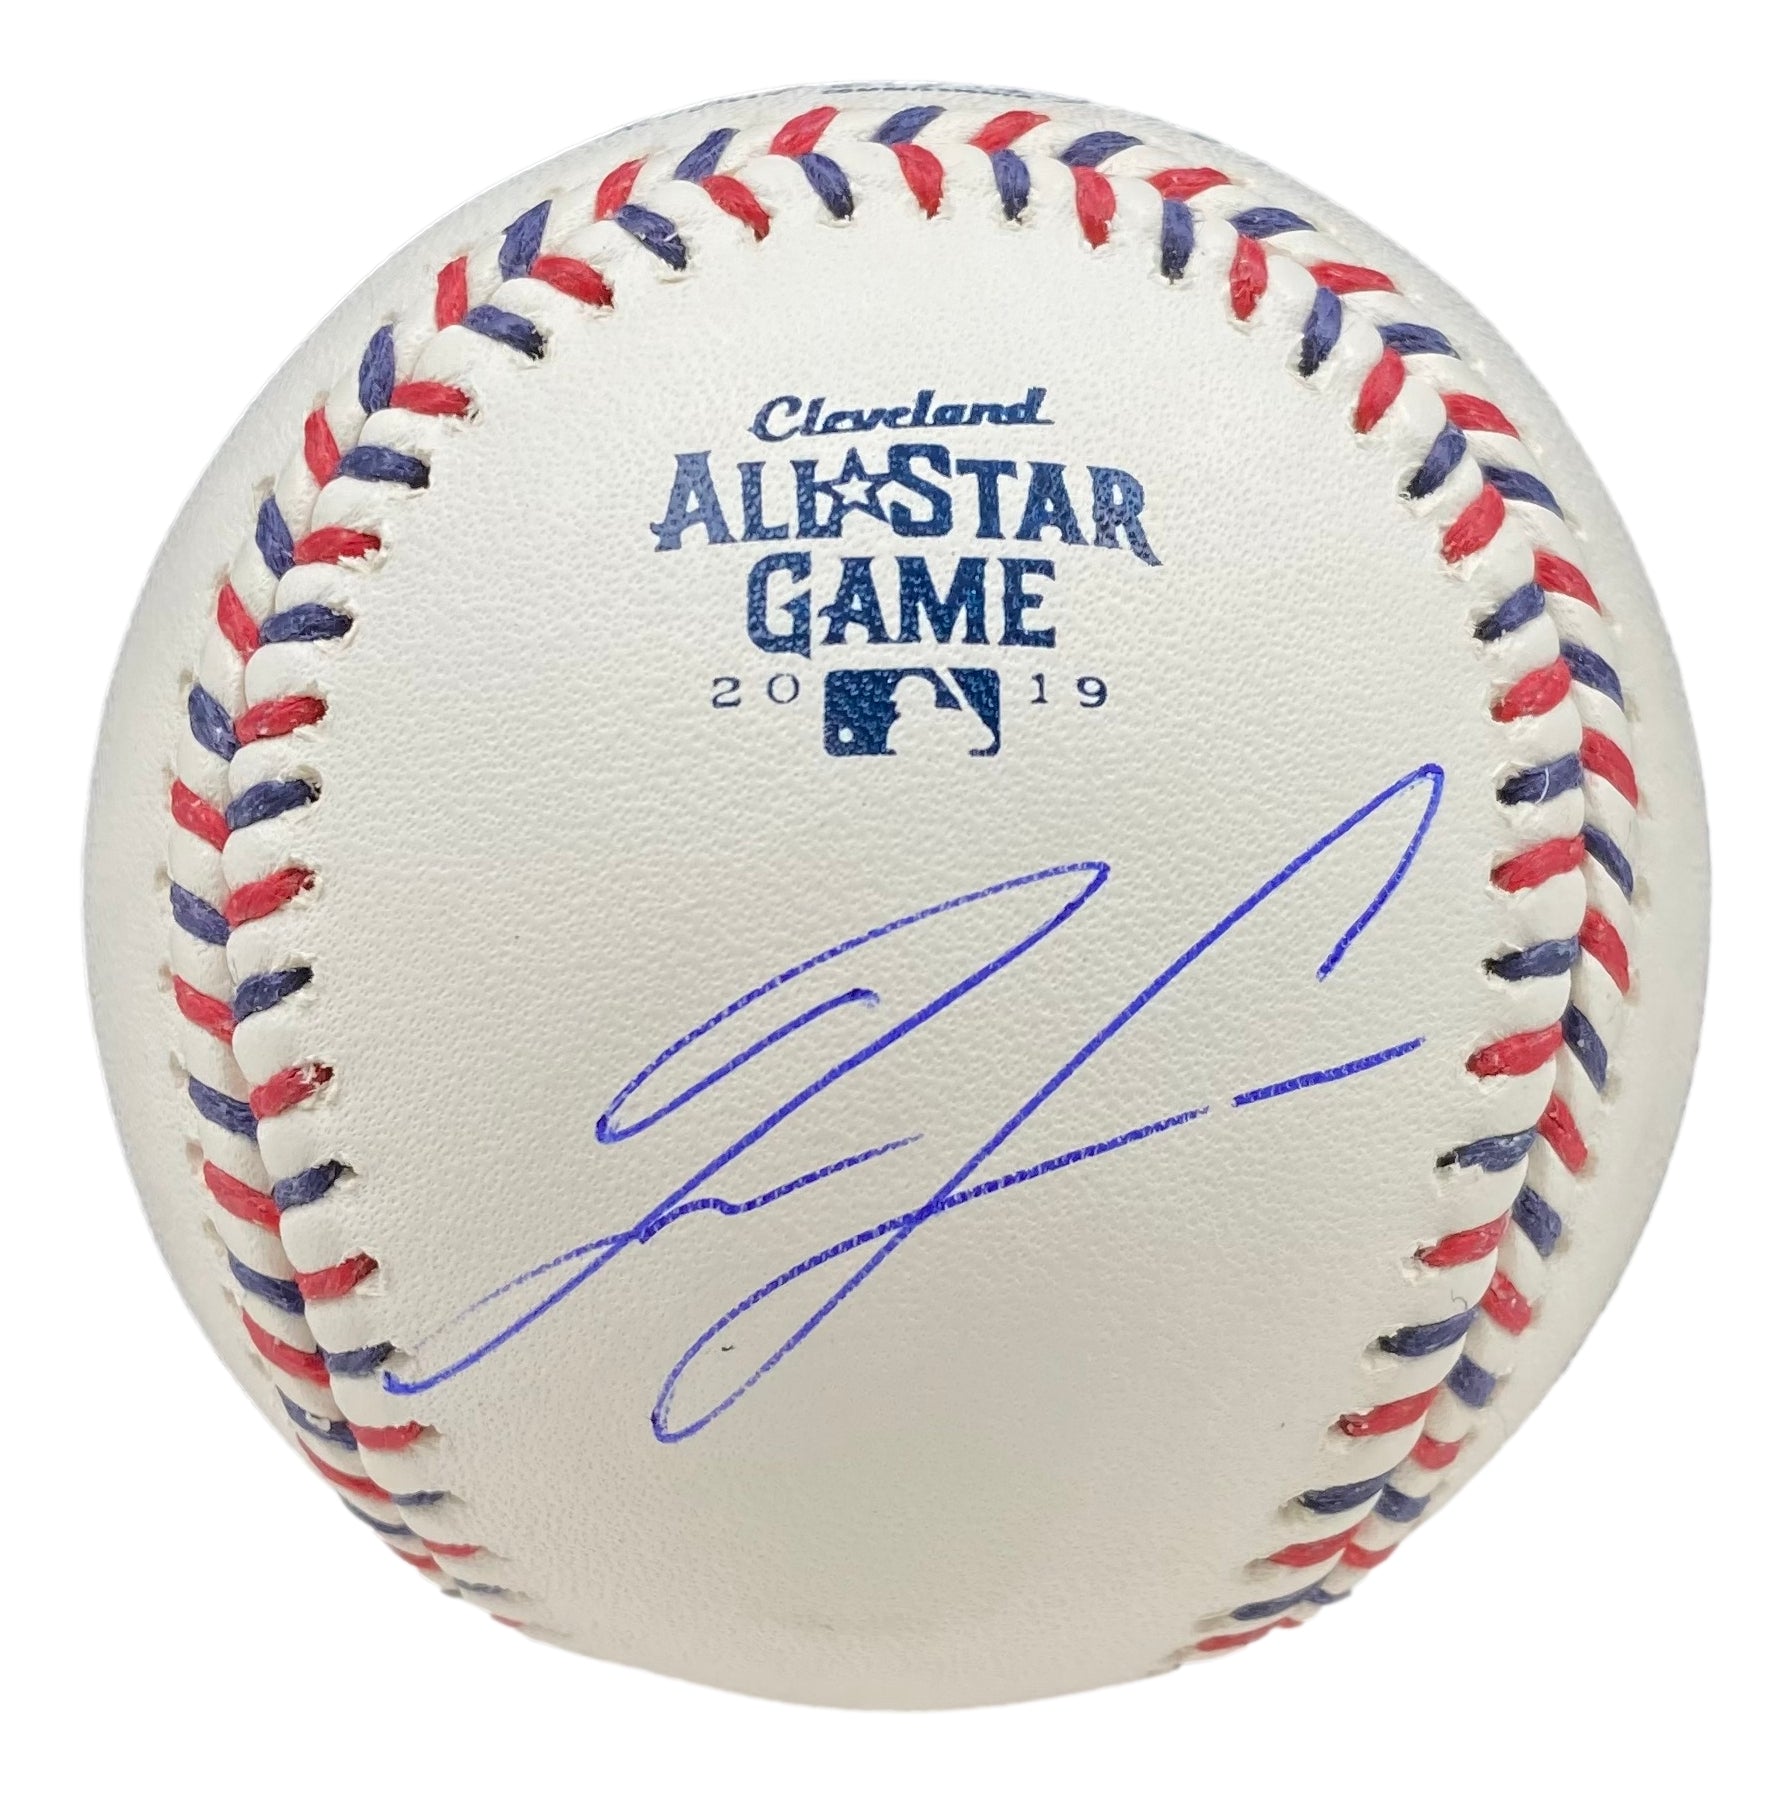 Ronald Acuna Jr. autographed signed inscribed jersey MLB Atlanta